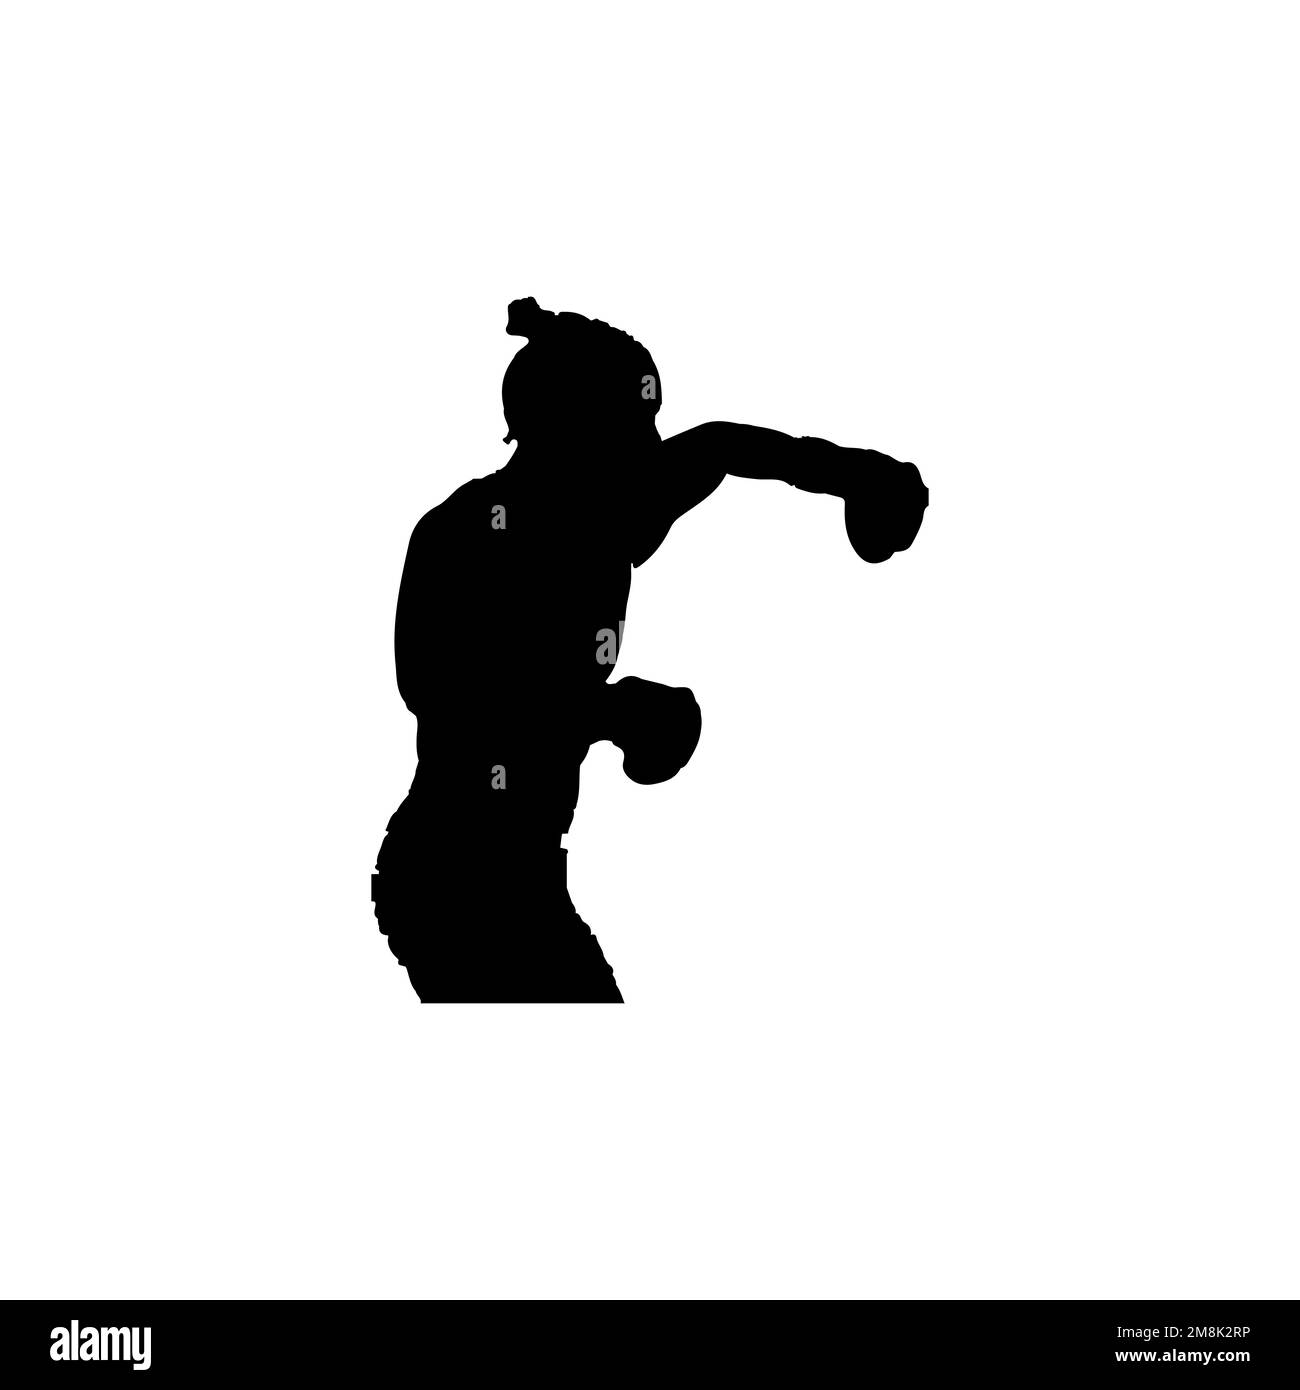 Woman kickboxer icon. Simple style woman kickboxing tournament poster background symbol. Woman kickboxer brand logo design element. Stock Vector